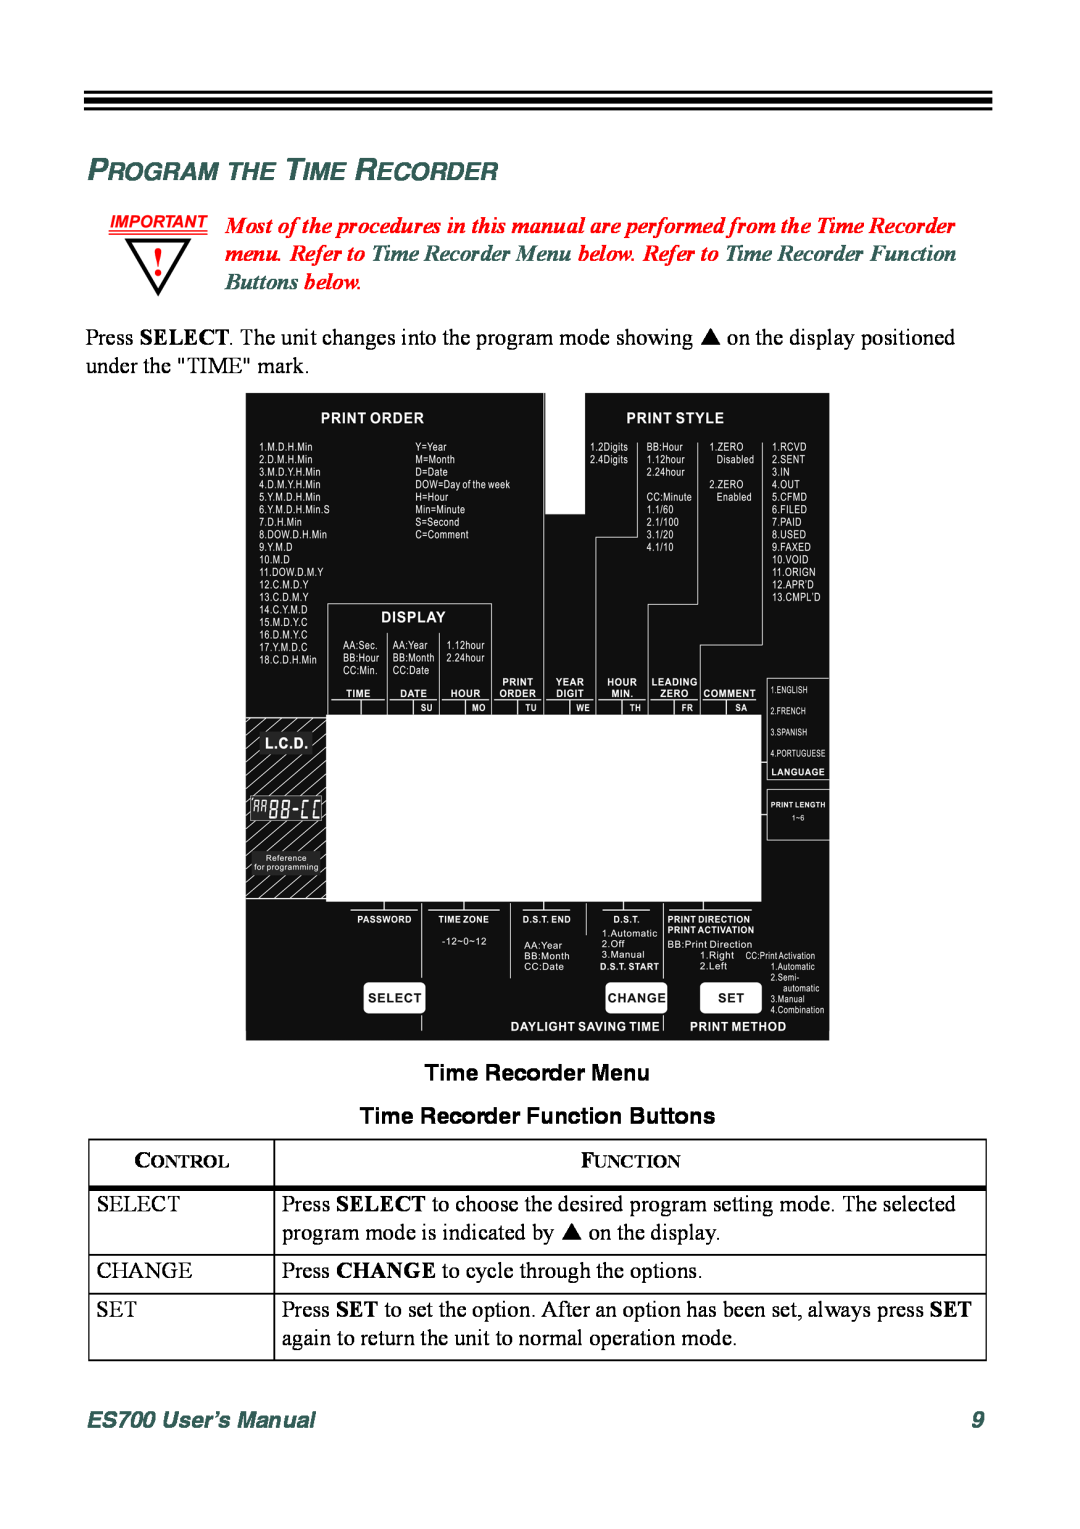 Acroprint ES700 user manual Program The Time Recorder, Time Recorder Menu, Time Recorder Function Buttons 